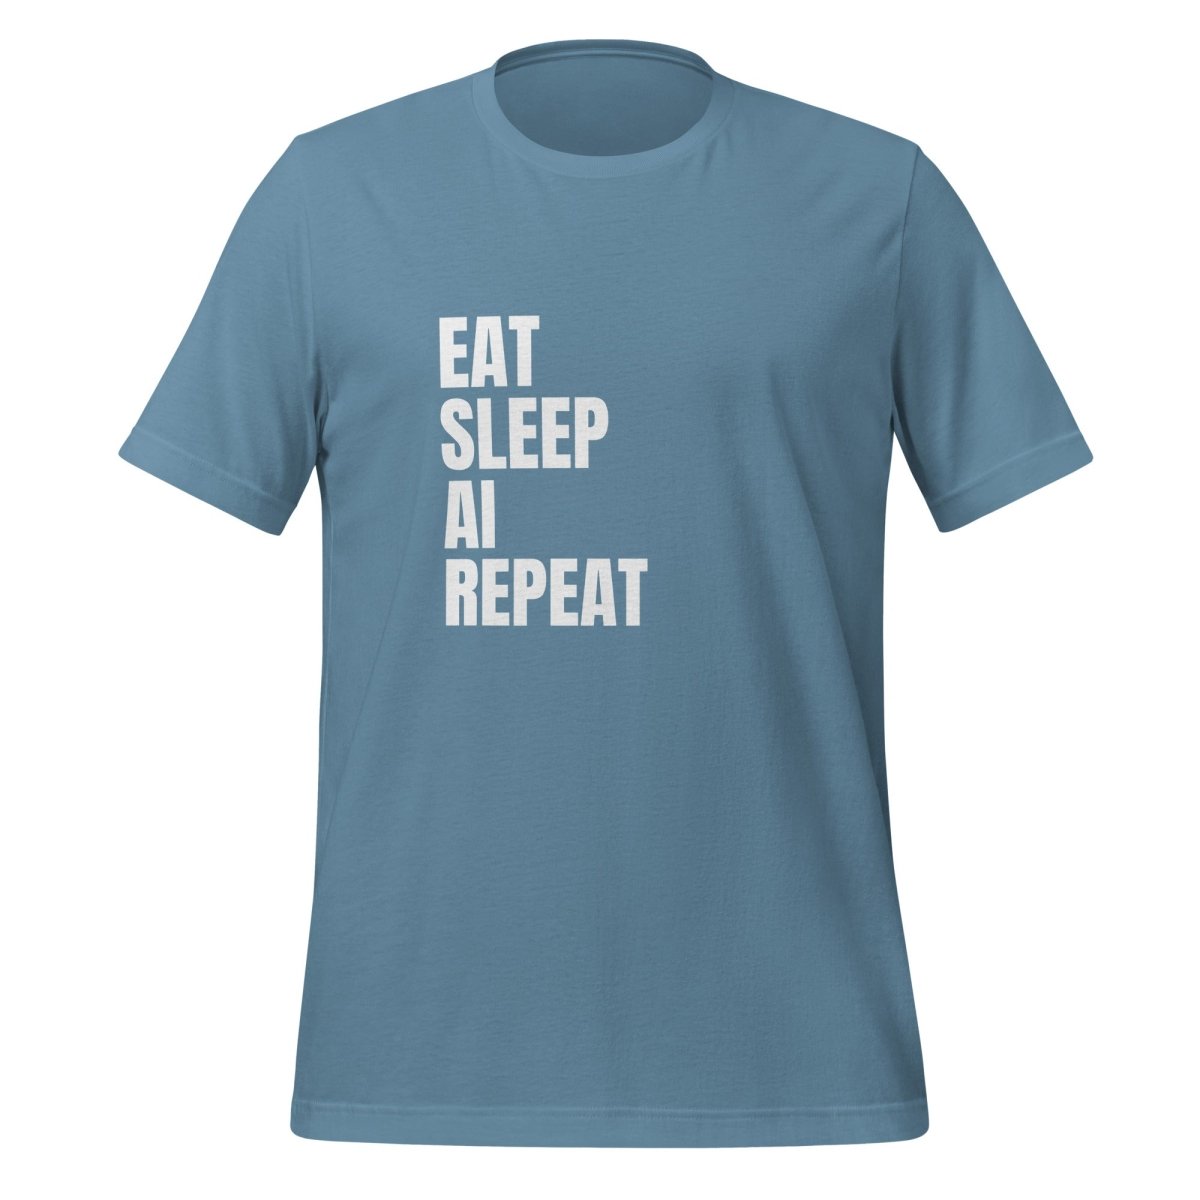 EAT SLEEP AI REPEAT T - Shirt 1 (unisex) - Steel Blue - AI Store